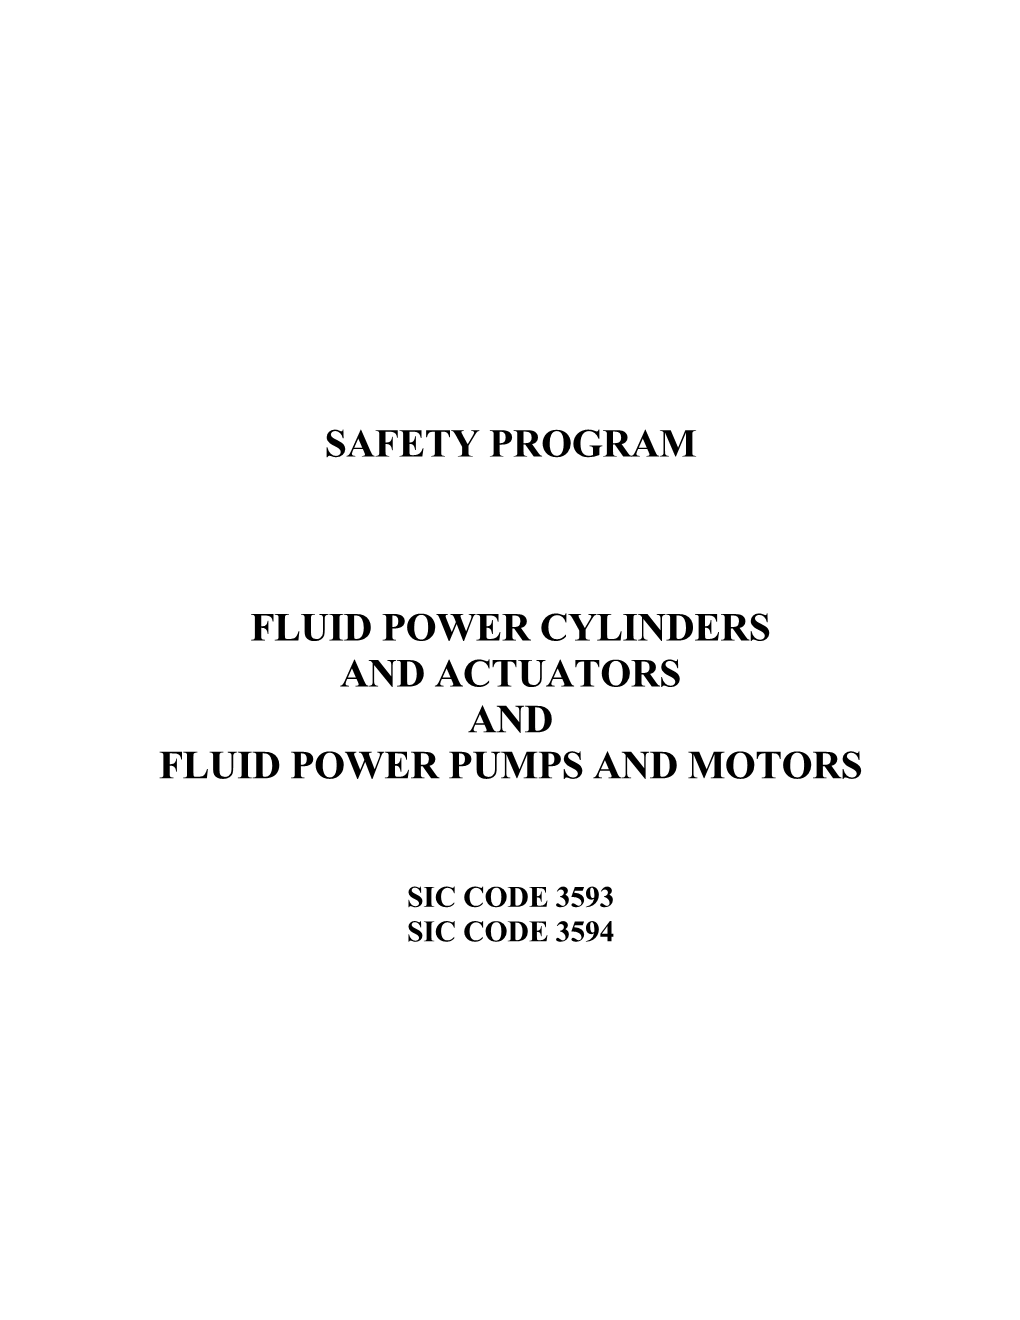 Fluid Power Cylinders Safety Program